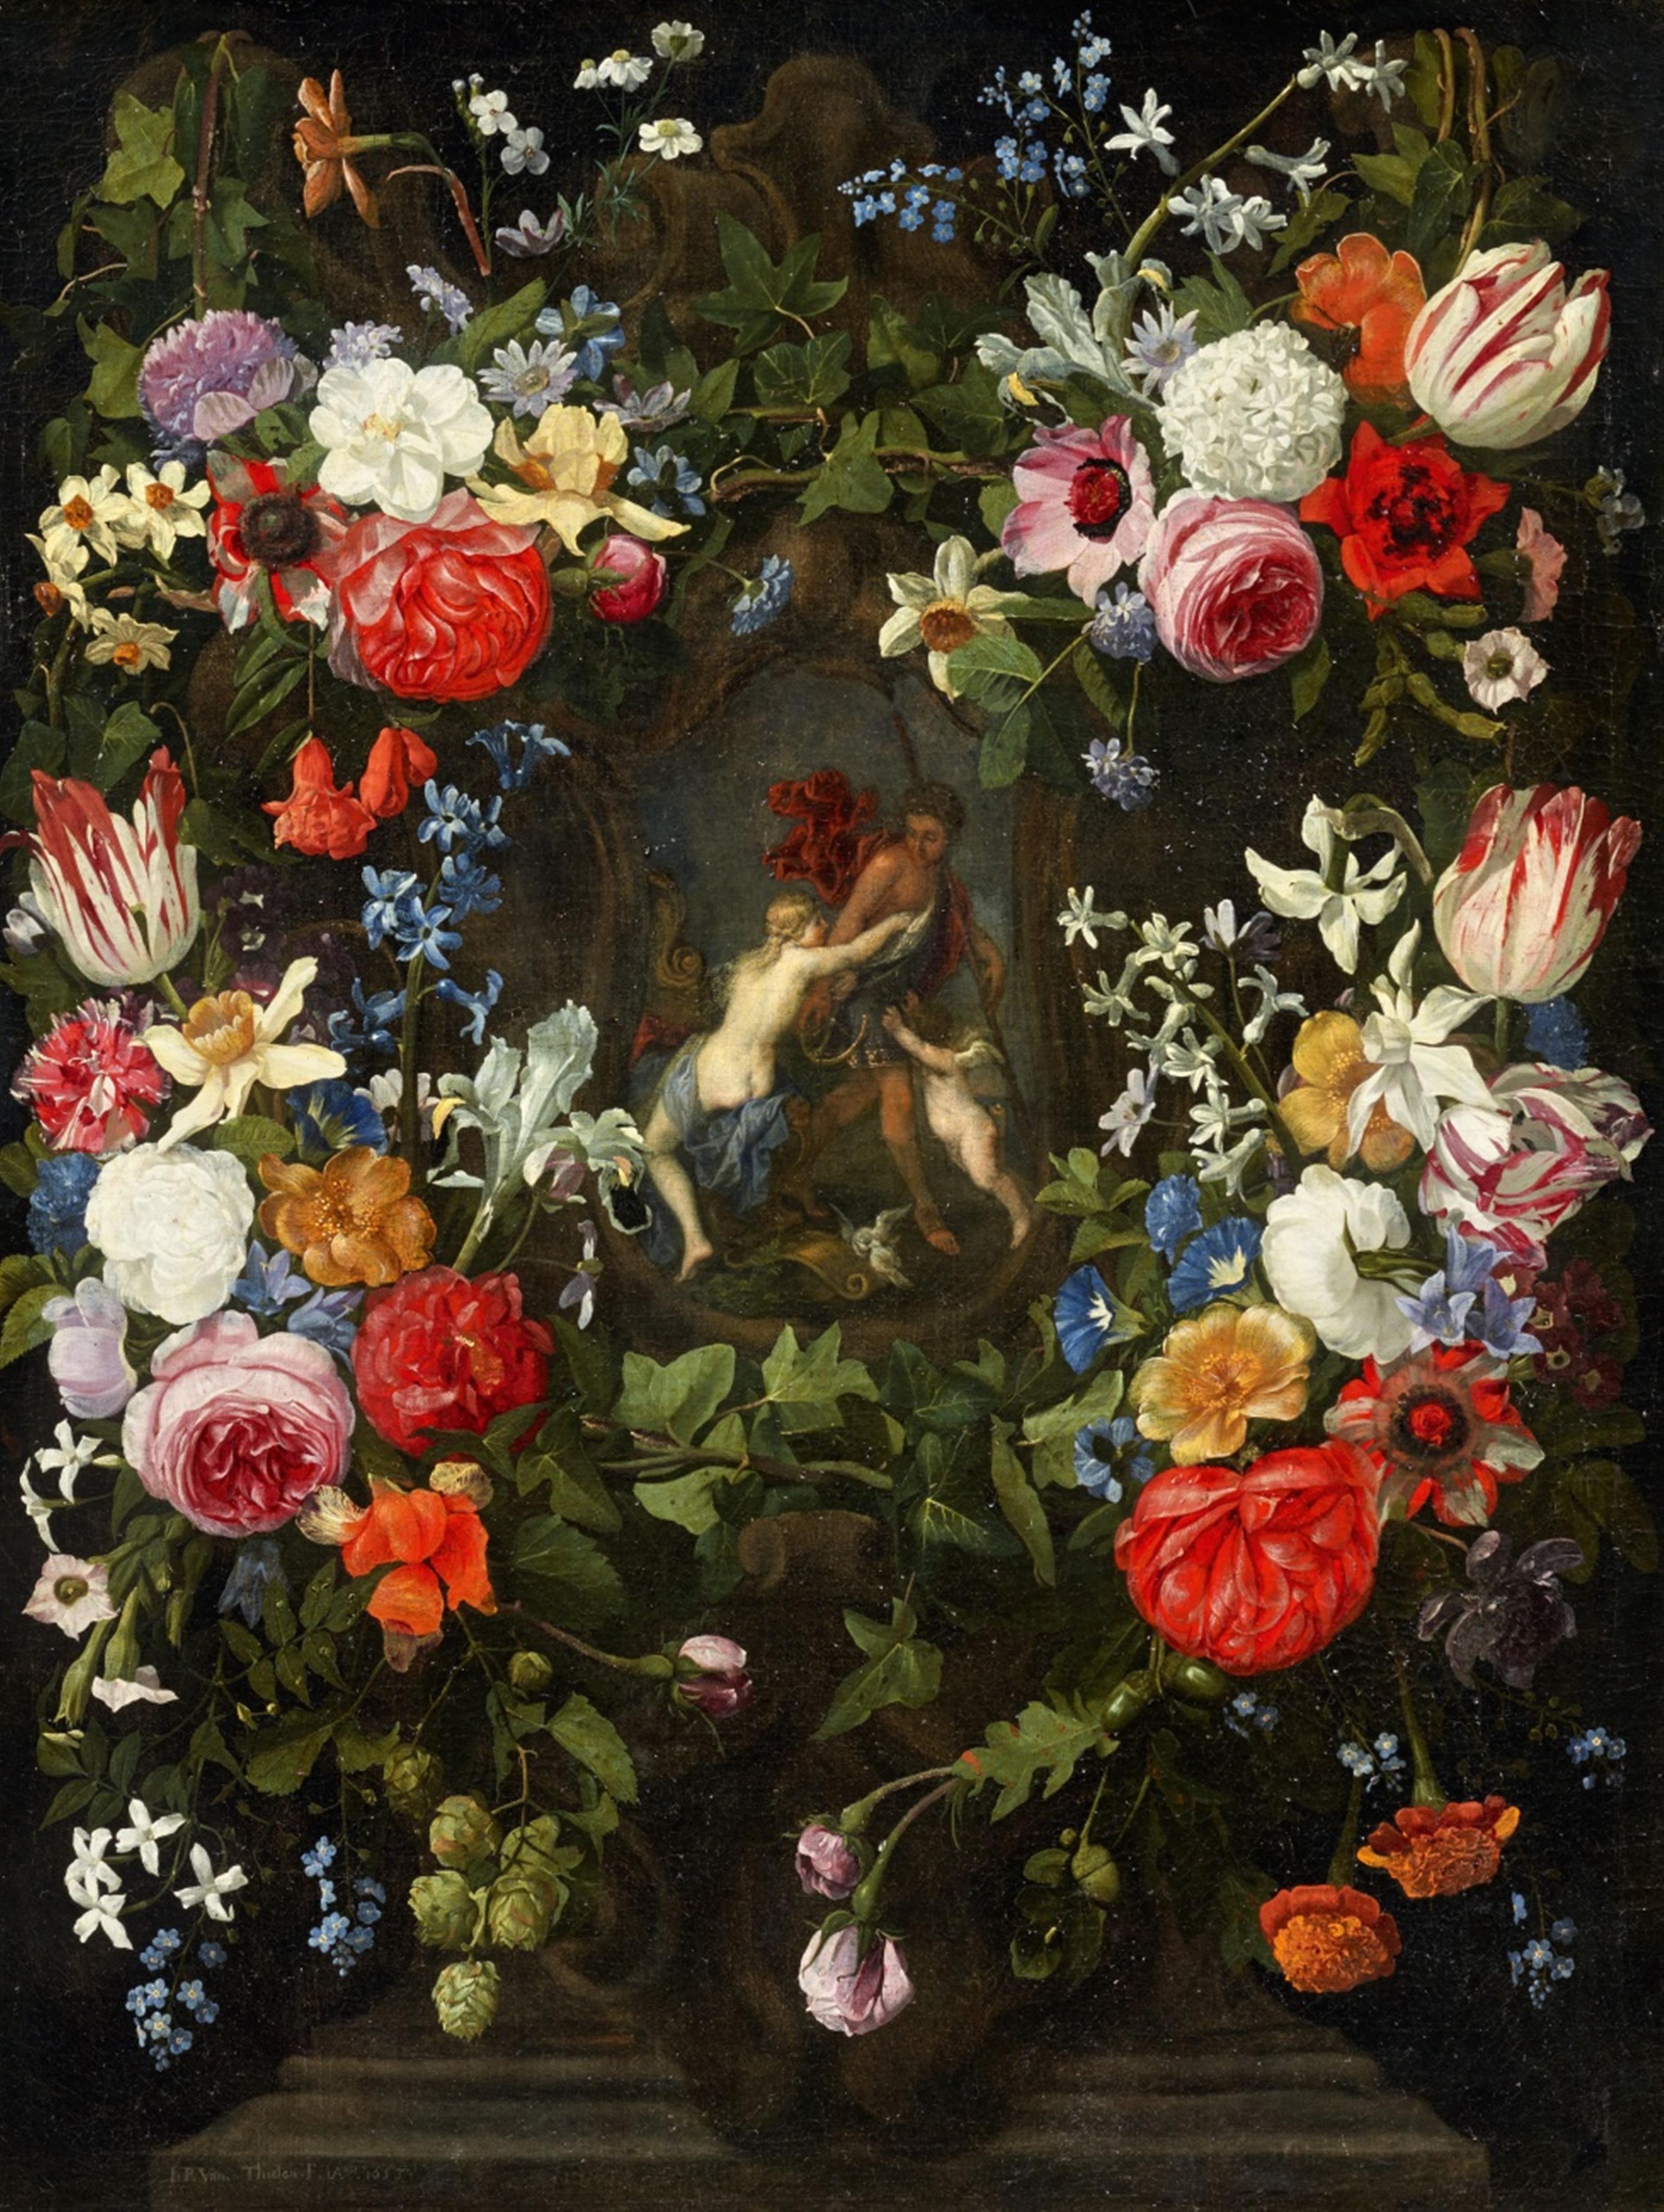 Jan Philip van Thielen - Venus and Adonis in a Floral Garland - image-1